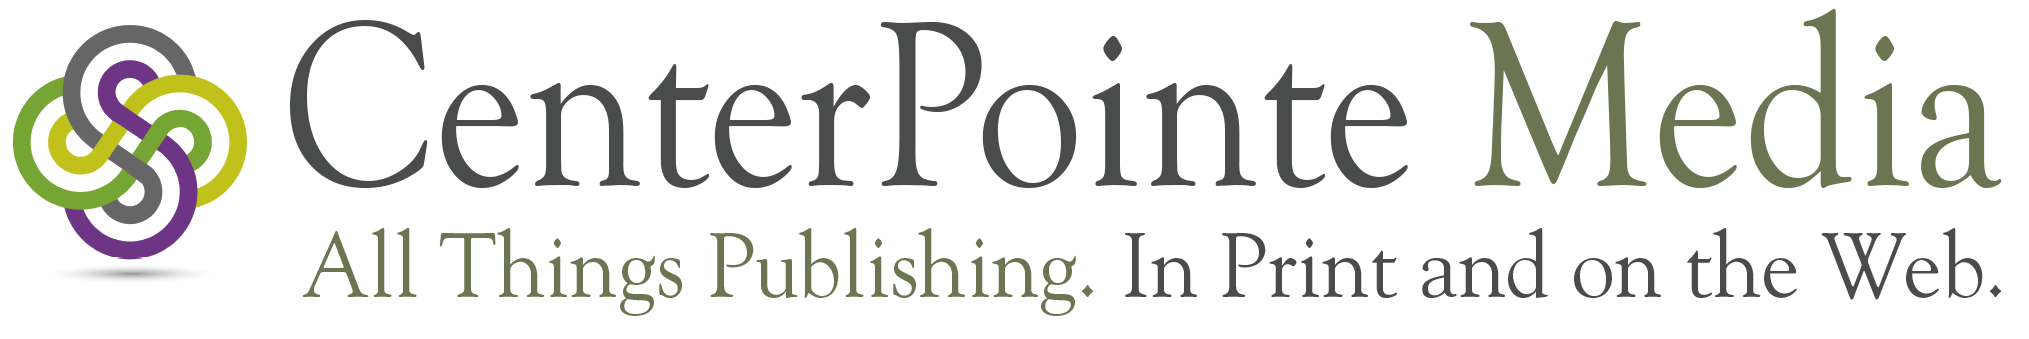 CenterPointe Media Logo